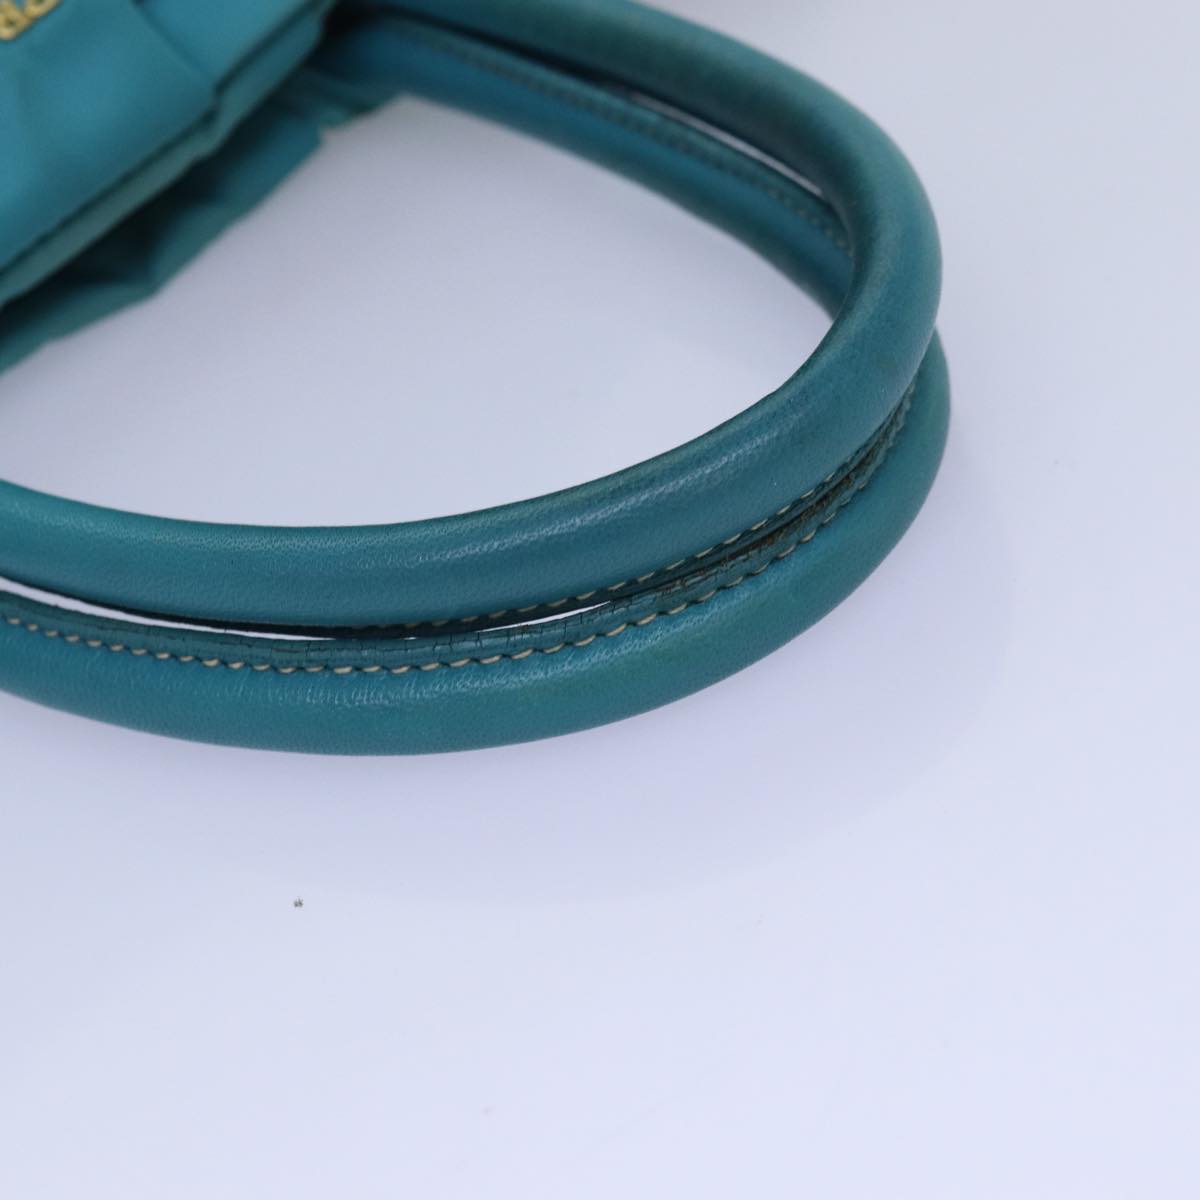 PRADA Hand Bag Nylon Turquoise Blue Auth 76968